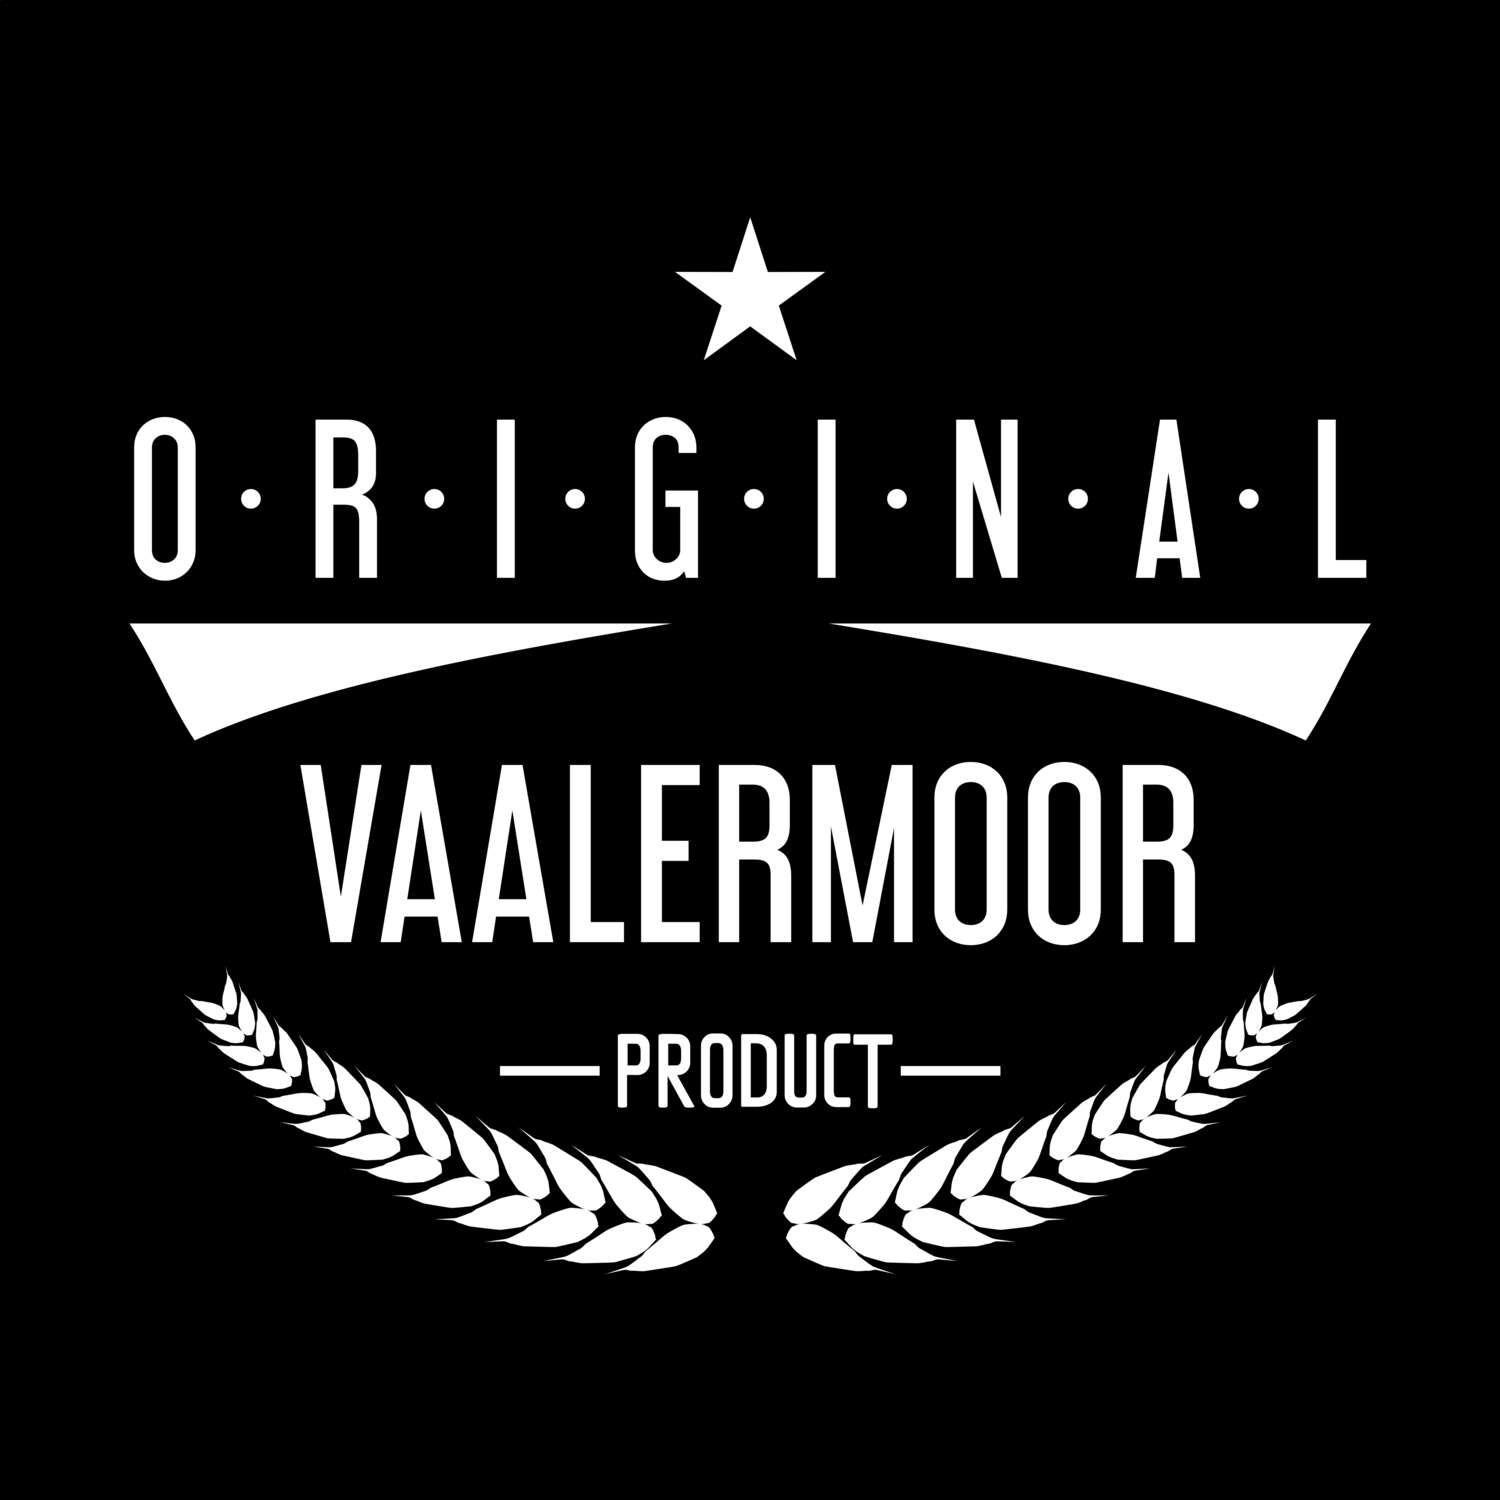 Vaalermoor T-Shirt »Original Product«